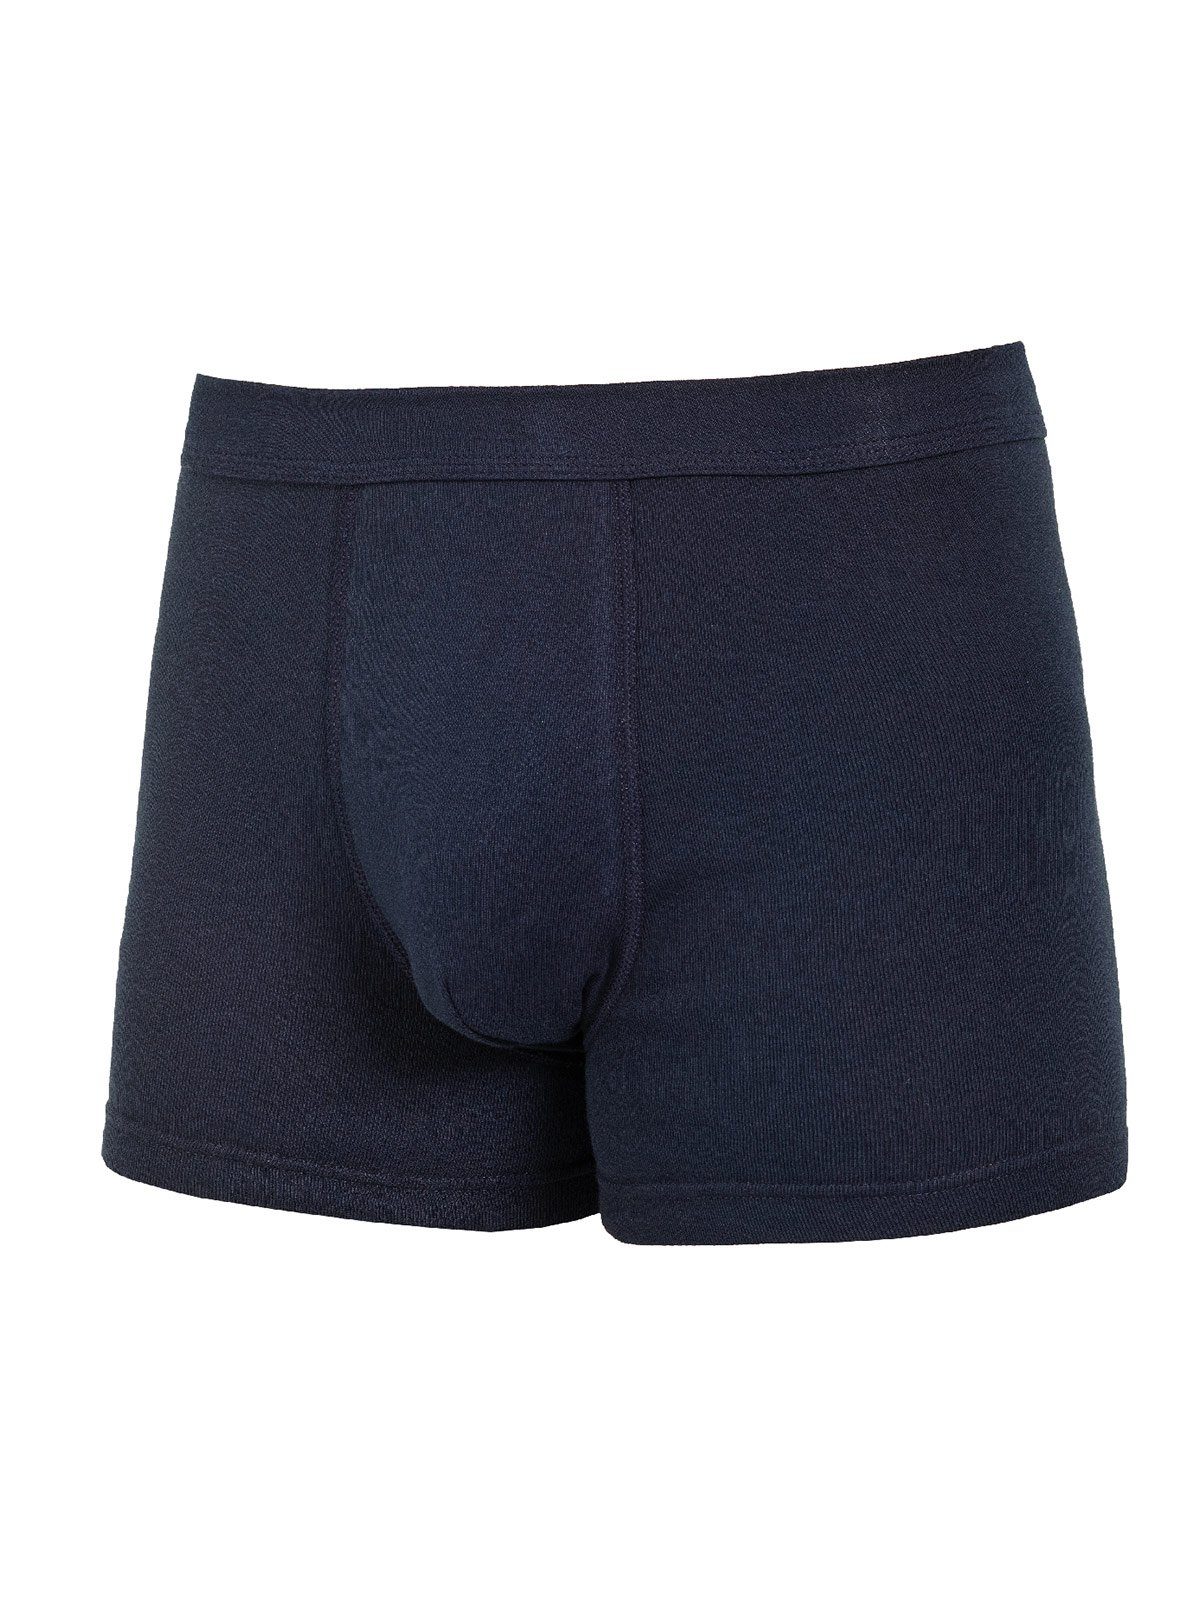 2-St) Pants Pants dunkelblau Retro hohe Bio Cotton KUMPF Herren Markenqualität (Packung, Pack 2er